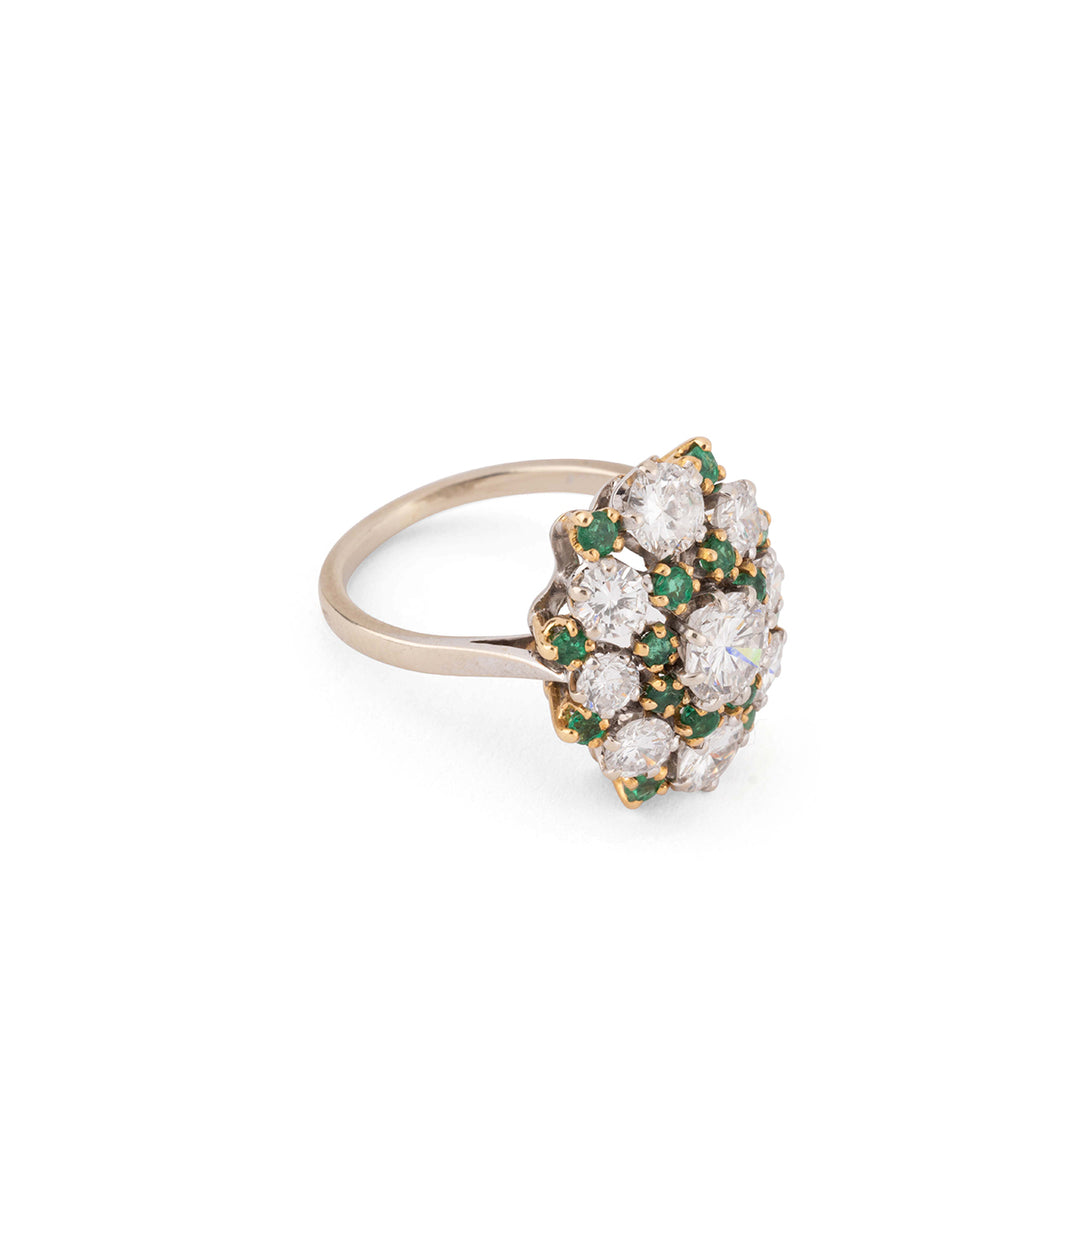 Vintage engagement ring diamonds and emeralds "Dagny" - Caillou Paris